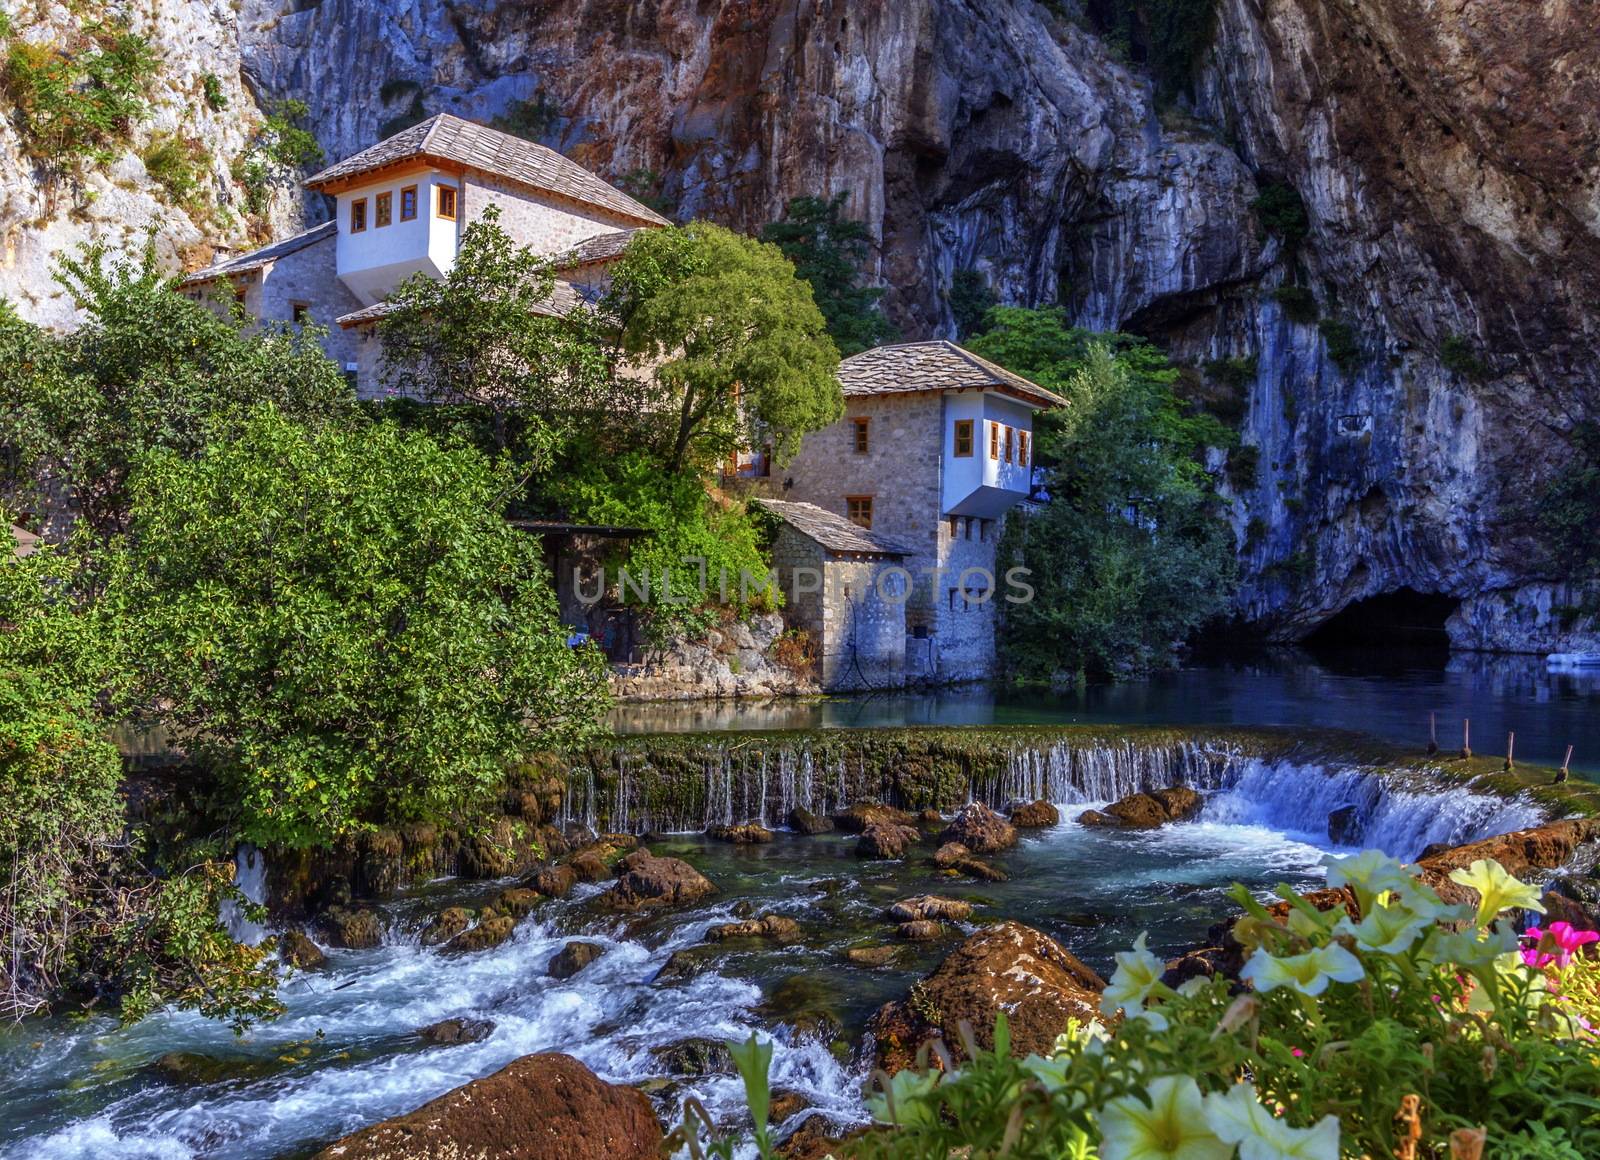 Small village Blagaj on Buna waterfall, Bosnia and Herzegovina by Elenaphotos21